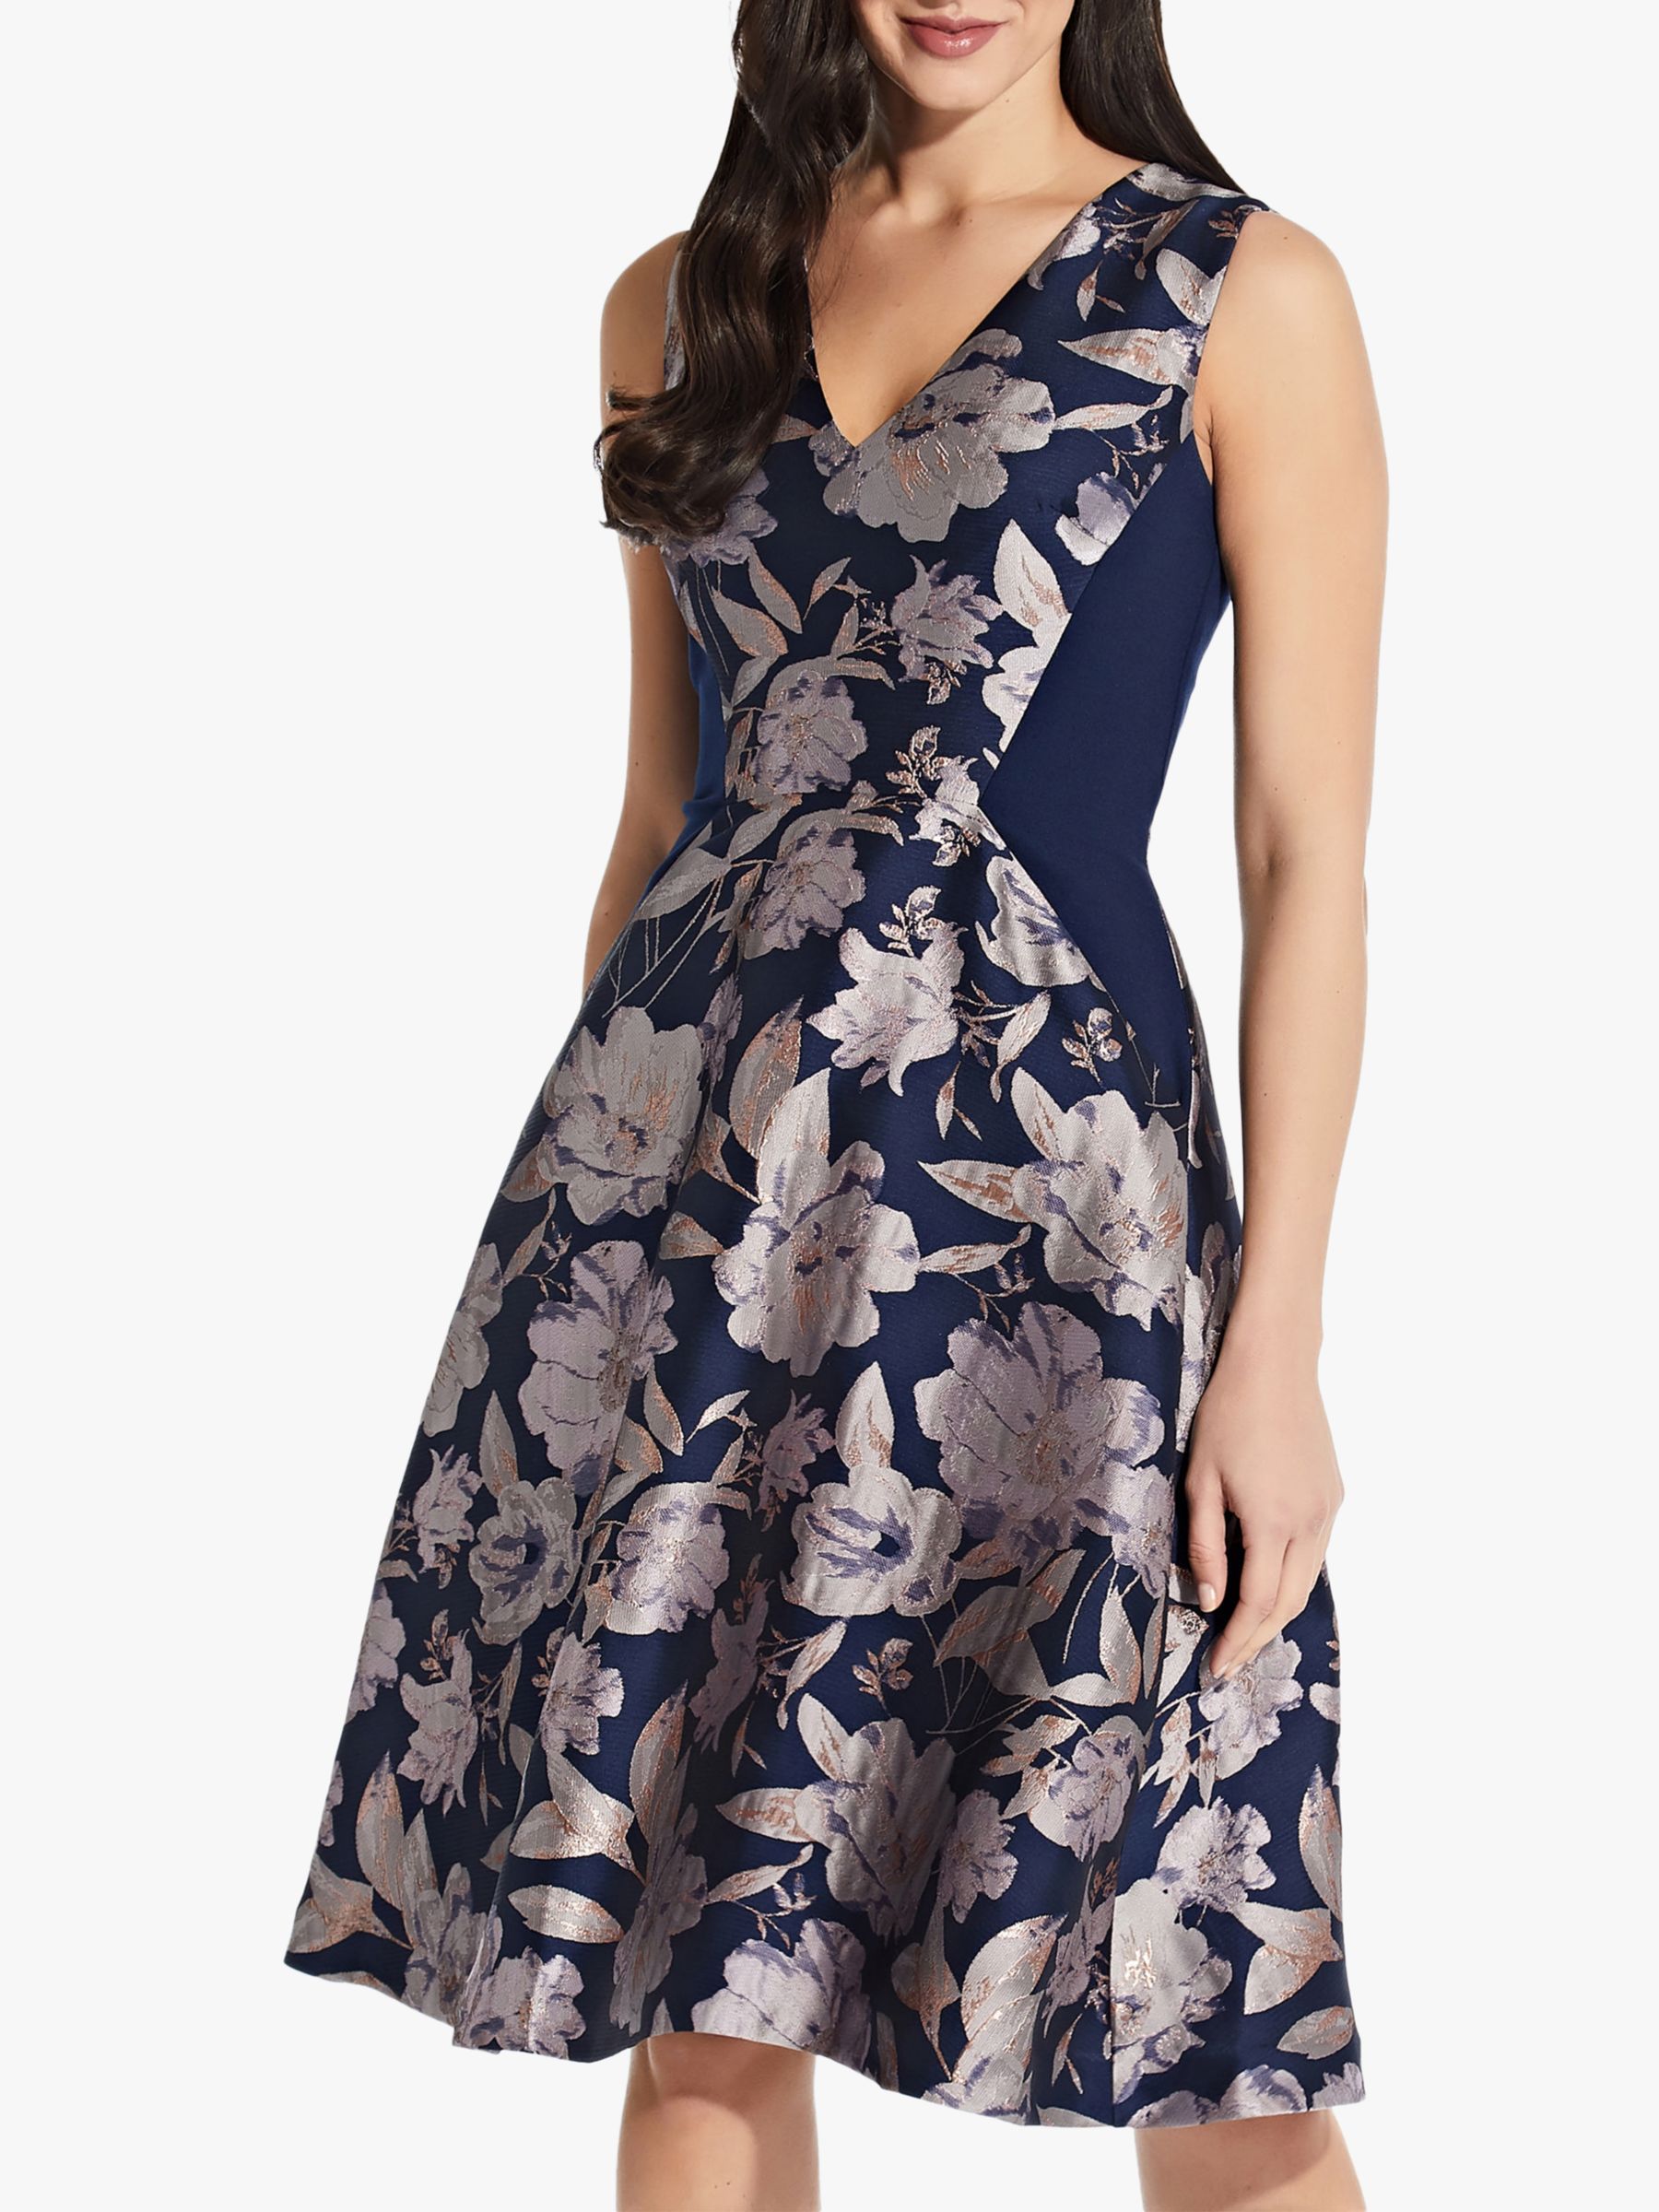 Adrianna Papell Jacquard Floral Print Knee Length Dress, Navy/Blush at ...